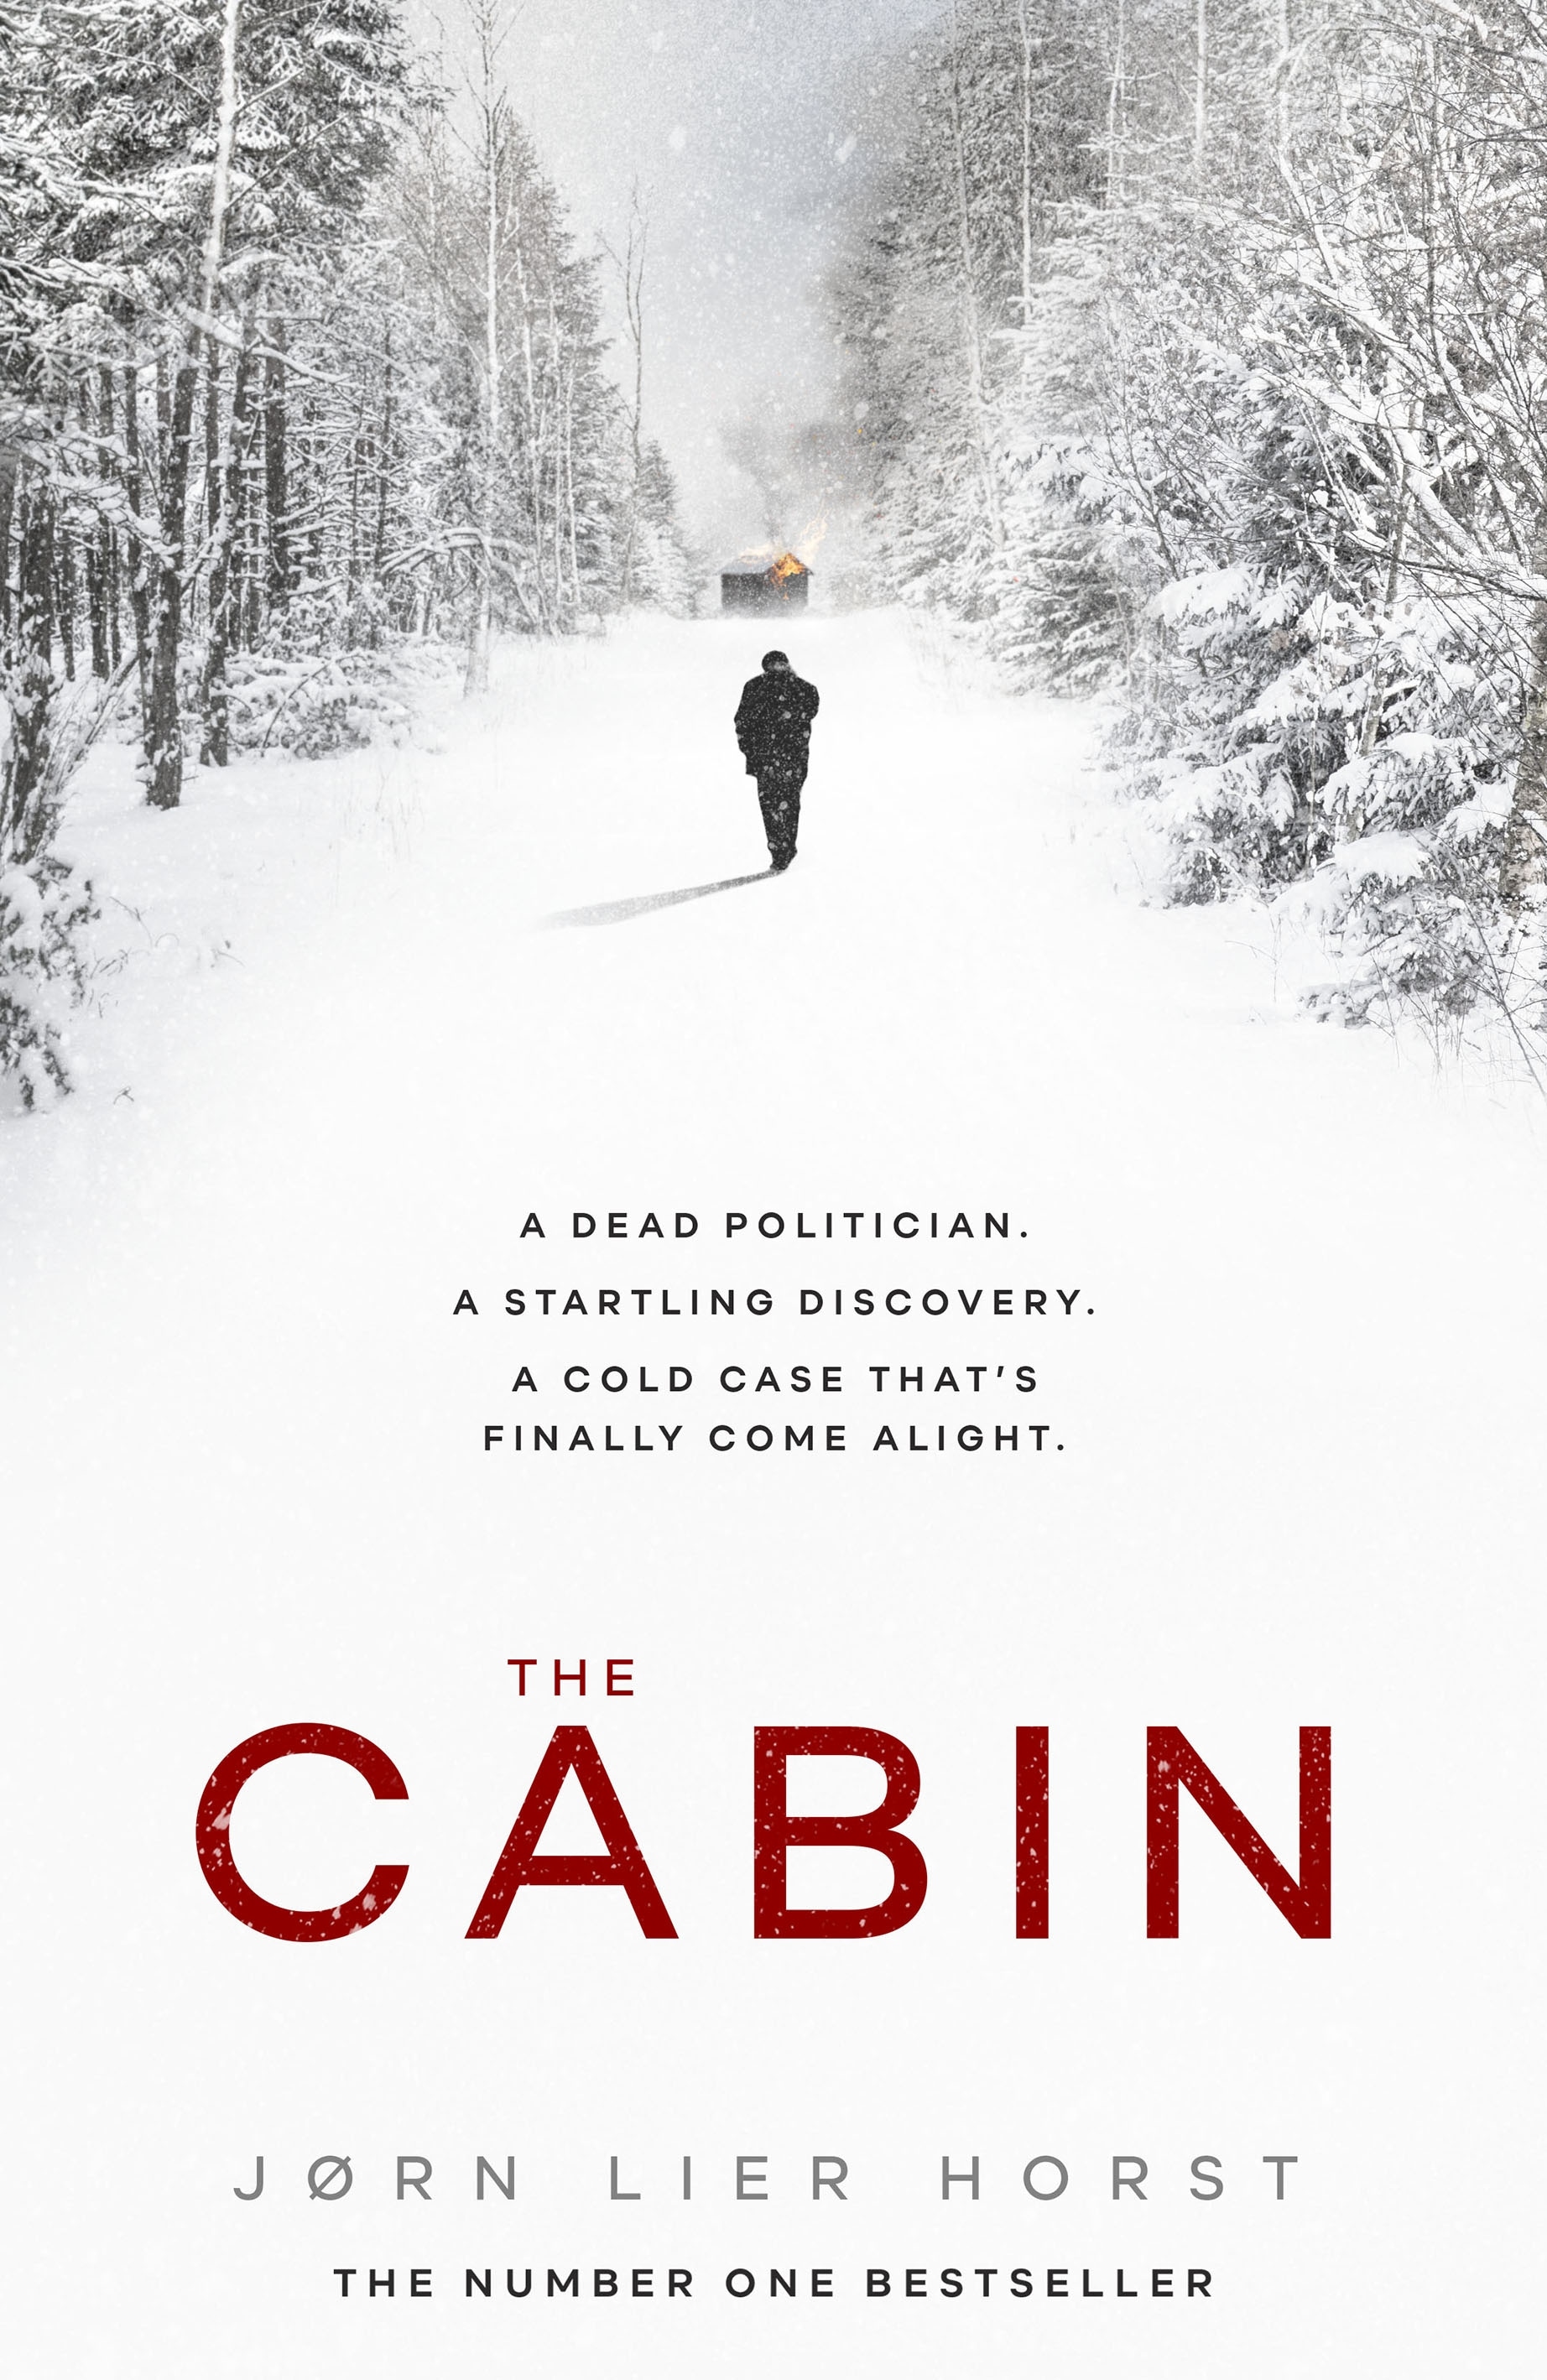 Book “The Cabin” by Jørn Lier Horst — August 8, 2019